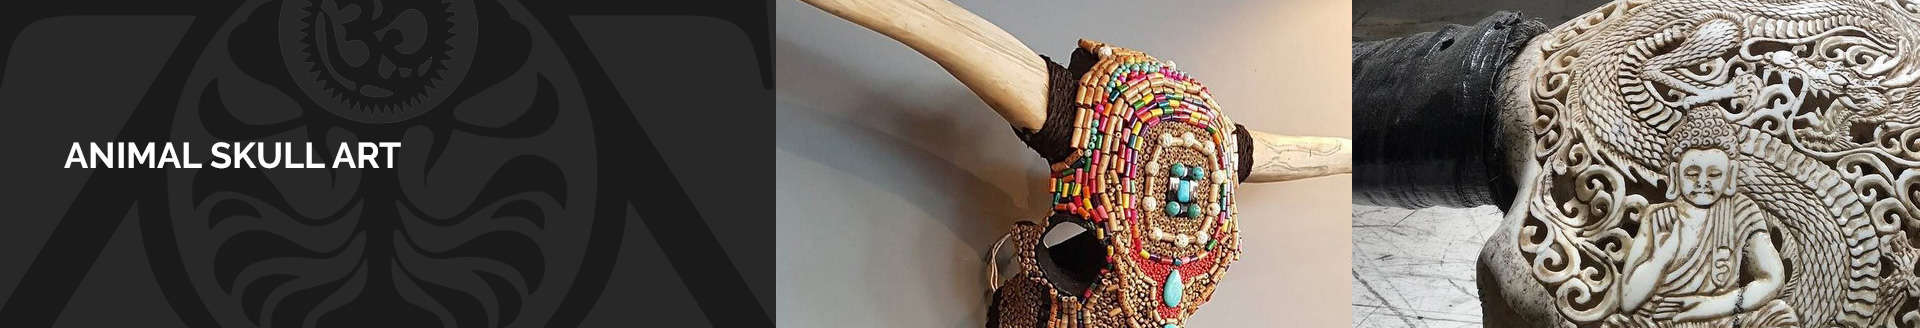 animal skull art catalogue manufacturers indonesia exporters wholesalers suppliers bali java jepara zenddu